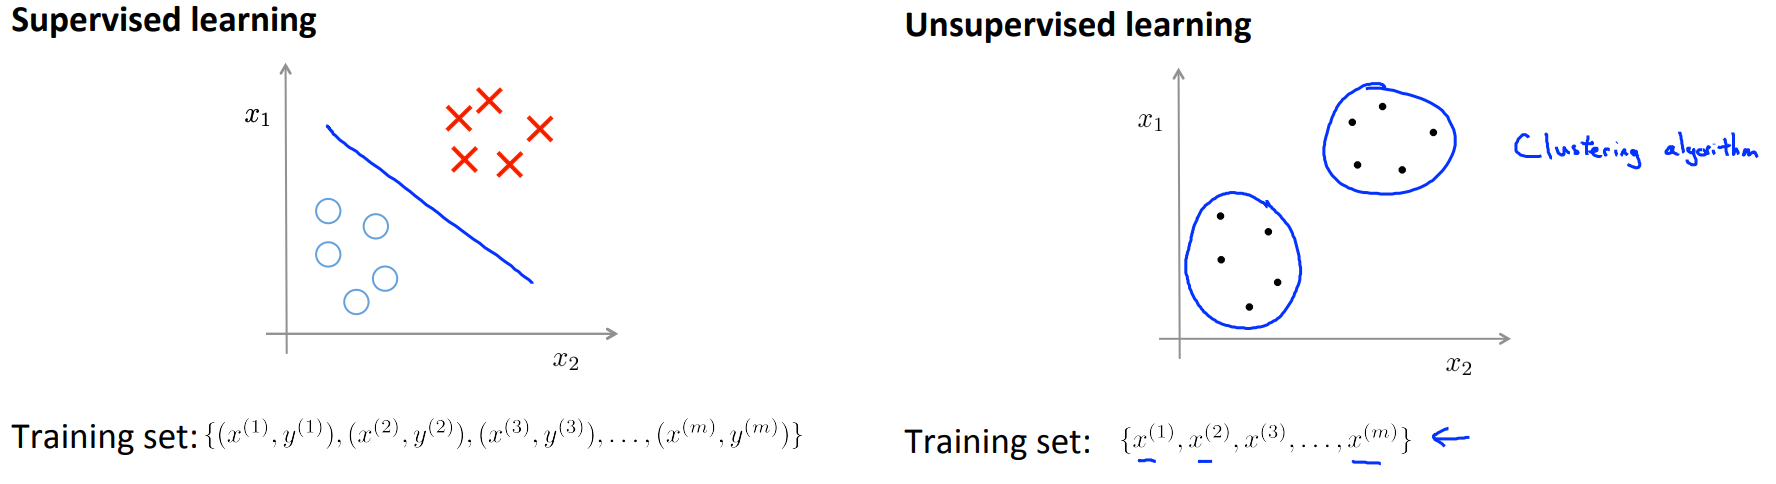 Unsupervised learning algorithm